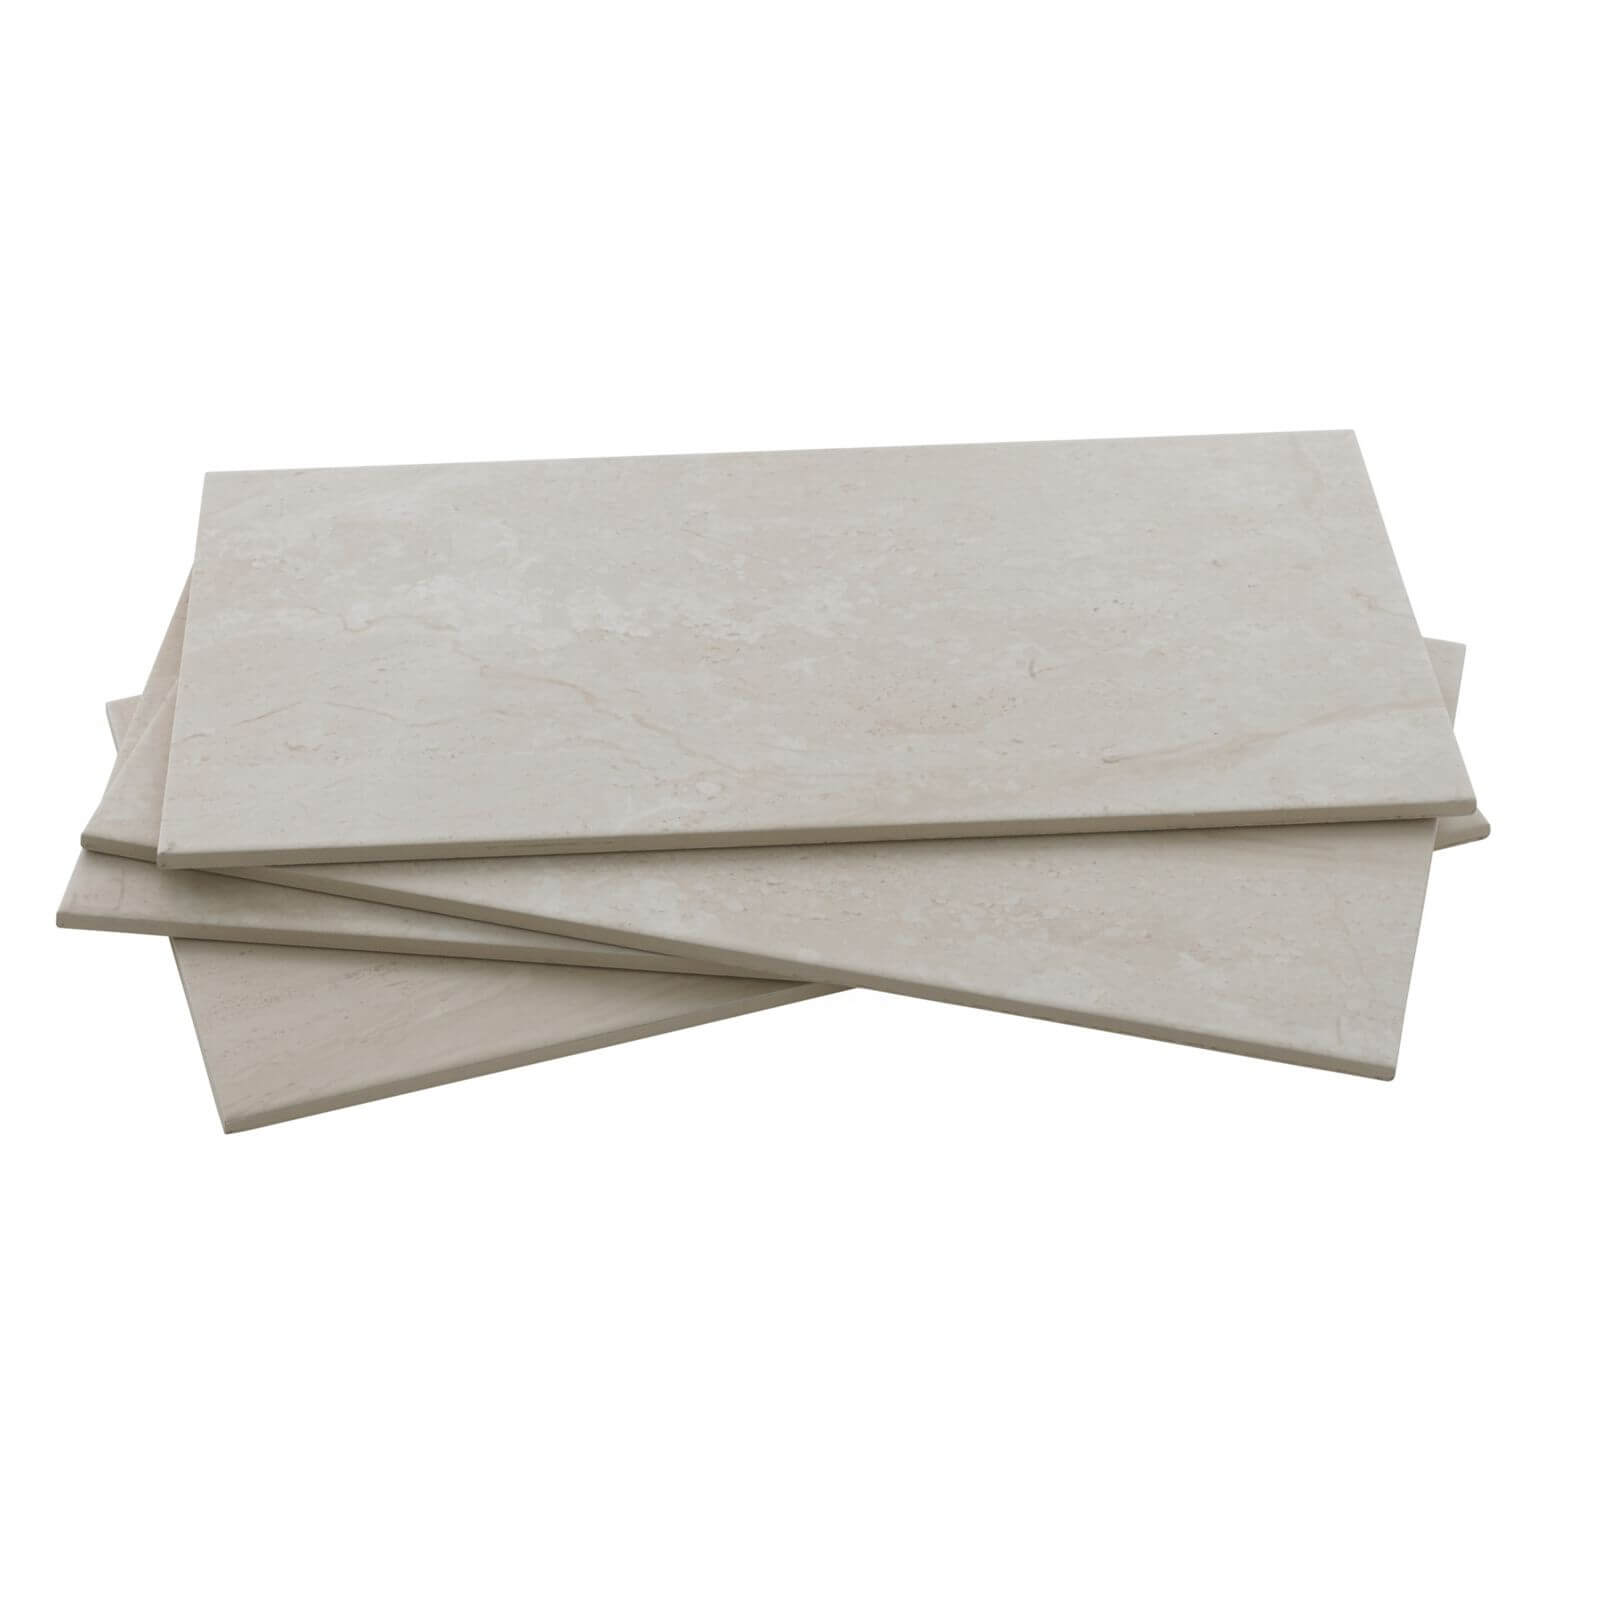 Indulgent Cream Wall & Floor Tile - 6 pack